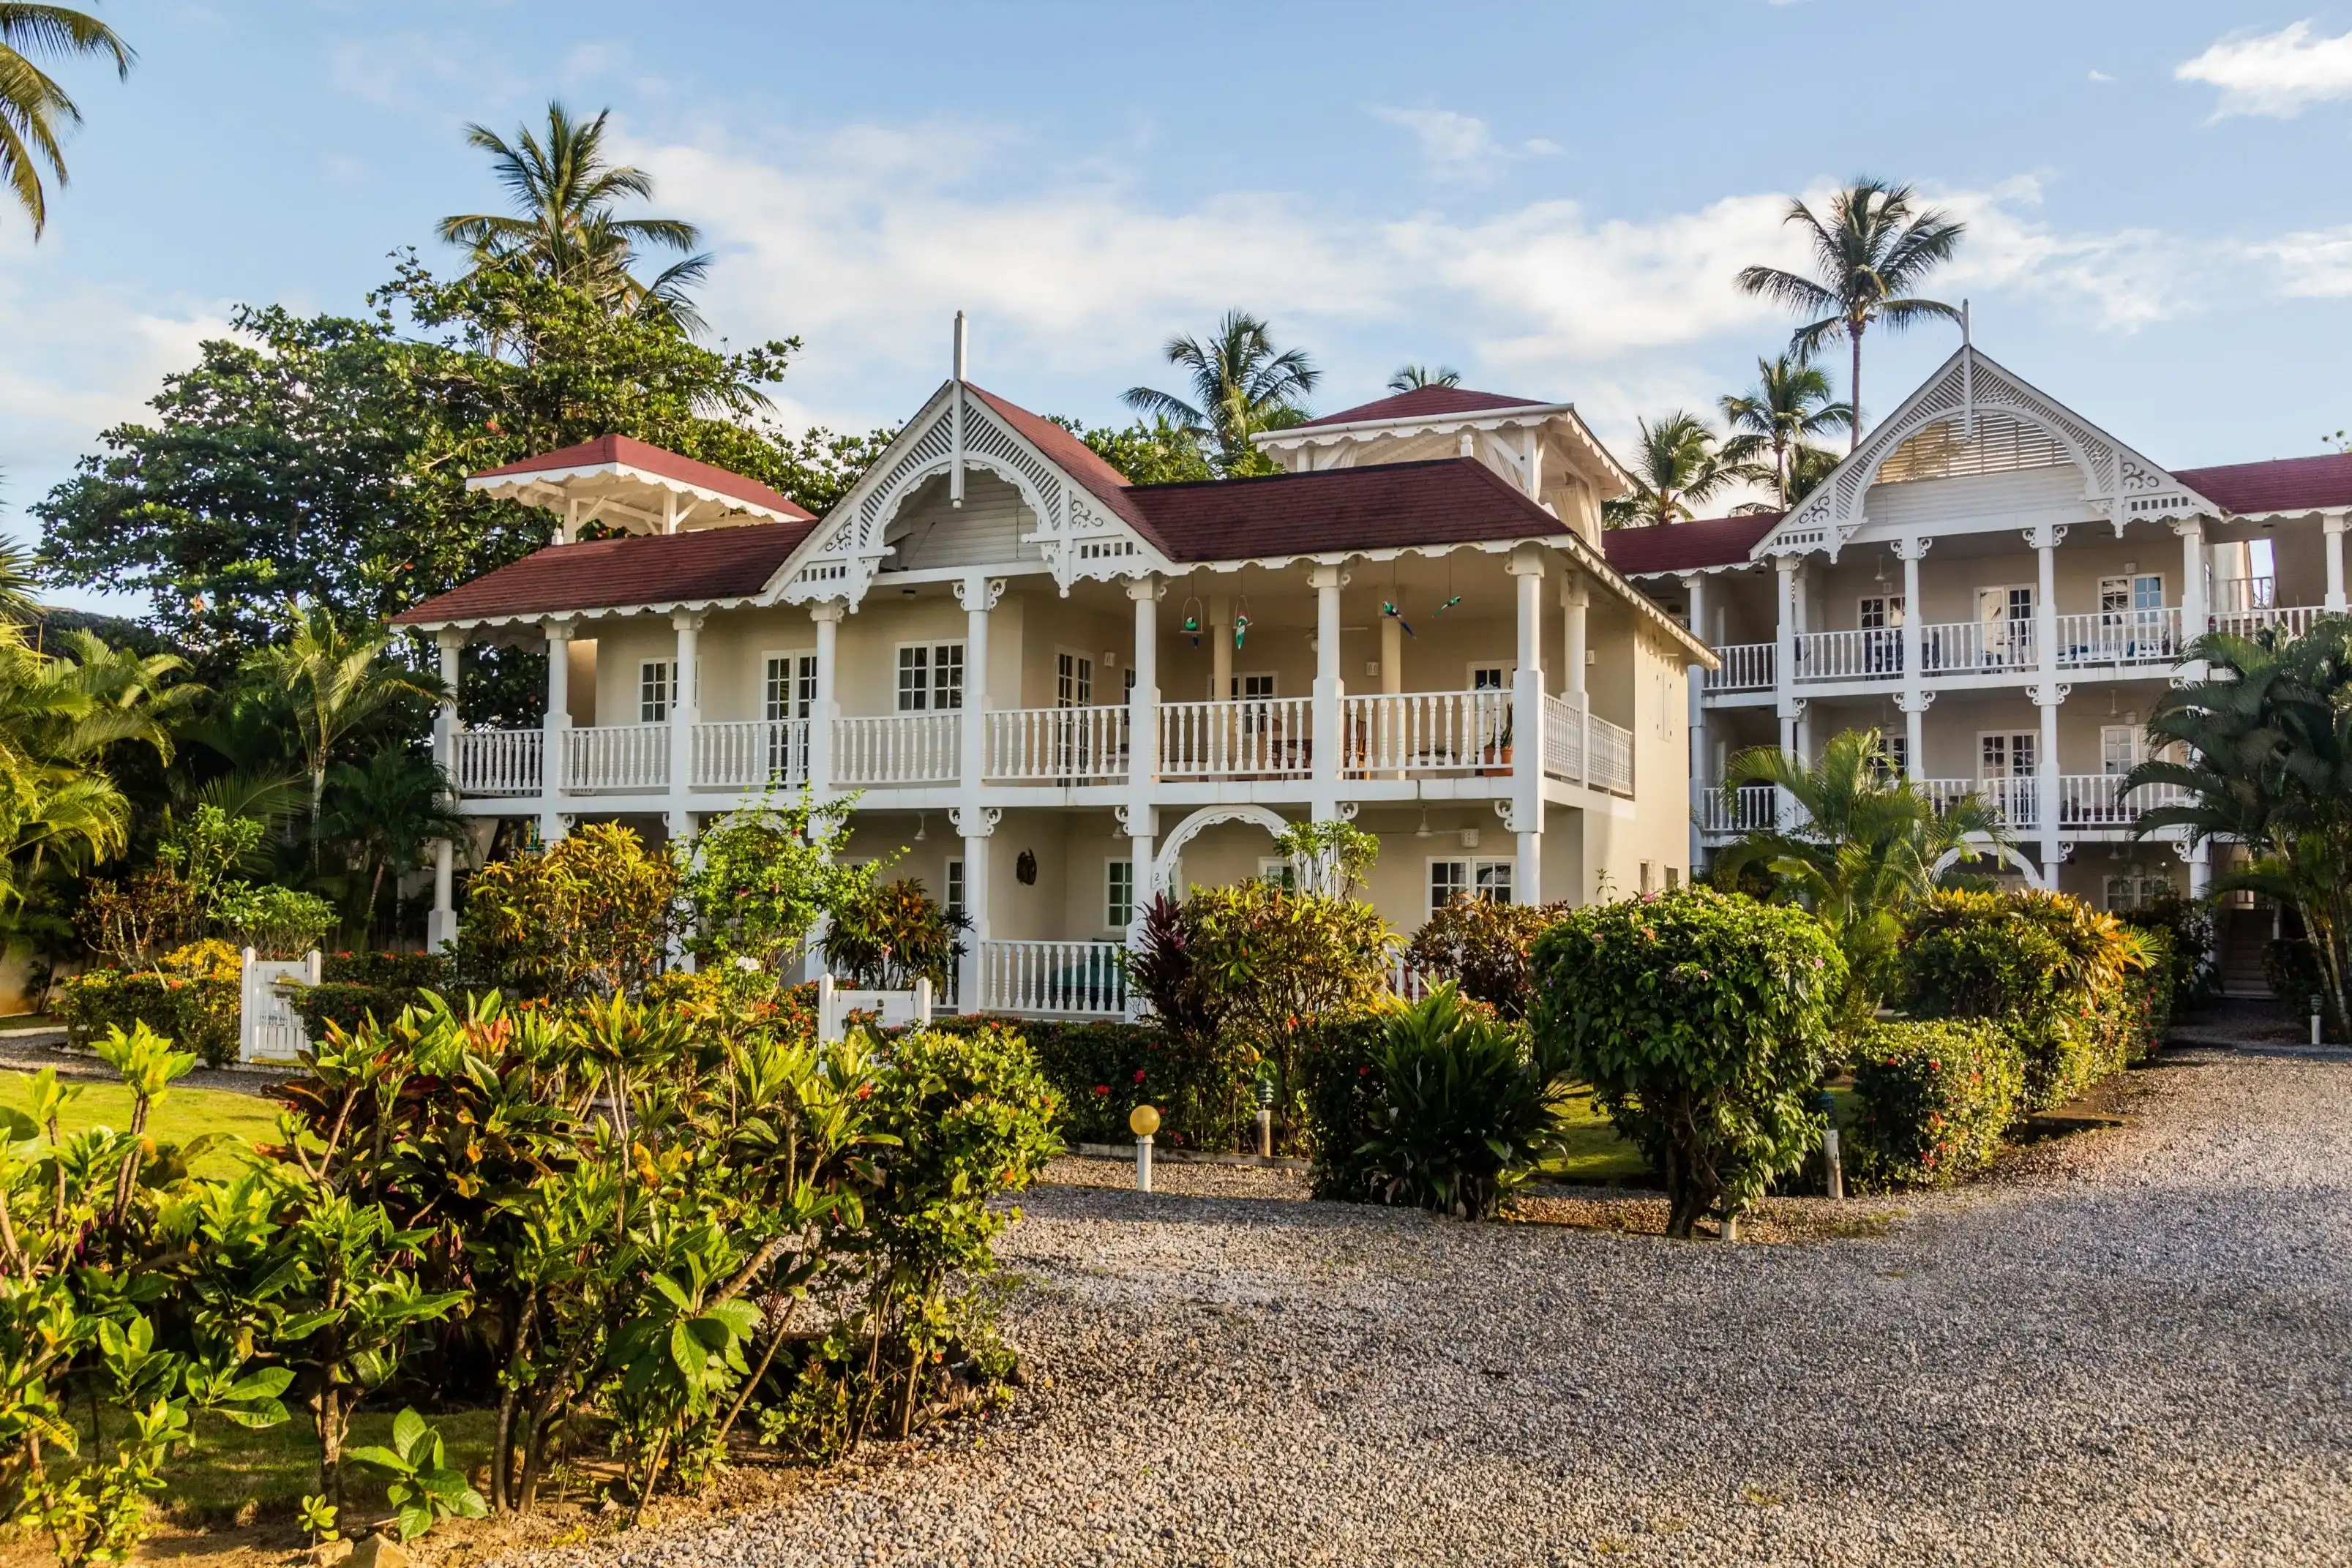 Best Las Terrenas hotels. Cheap hotels in Las Terrenas, Dominican Republic